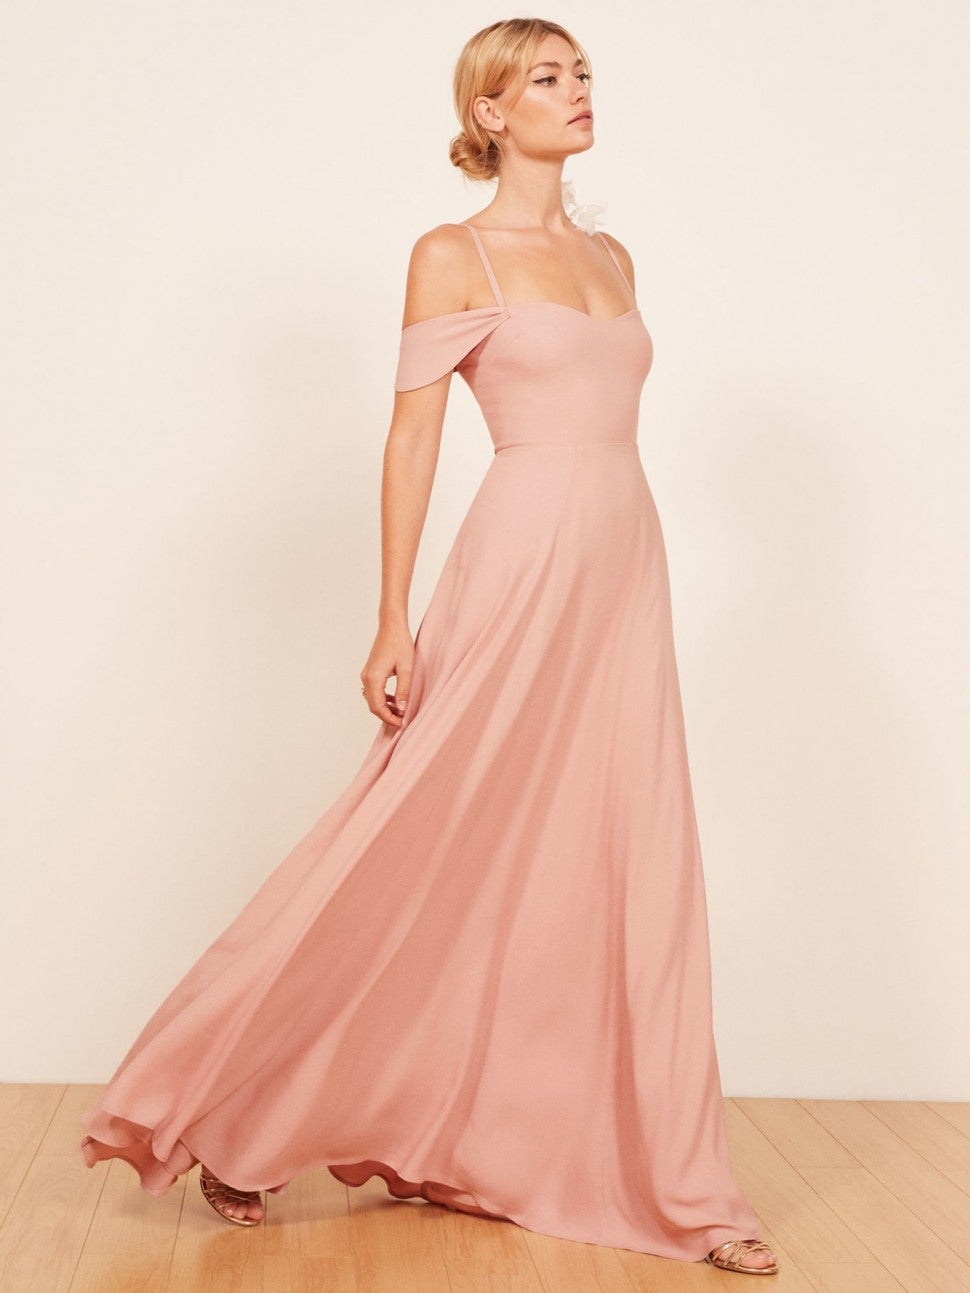 Reformation pink wedding dress